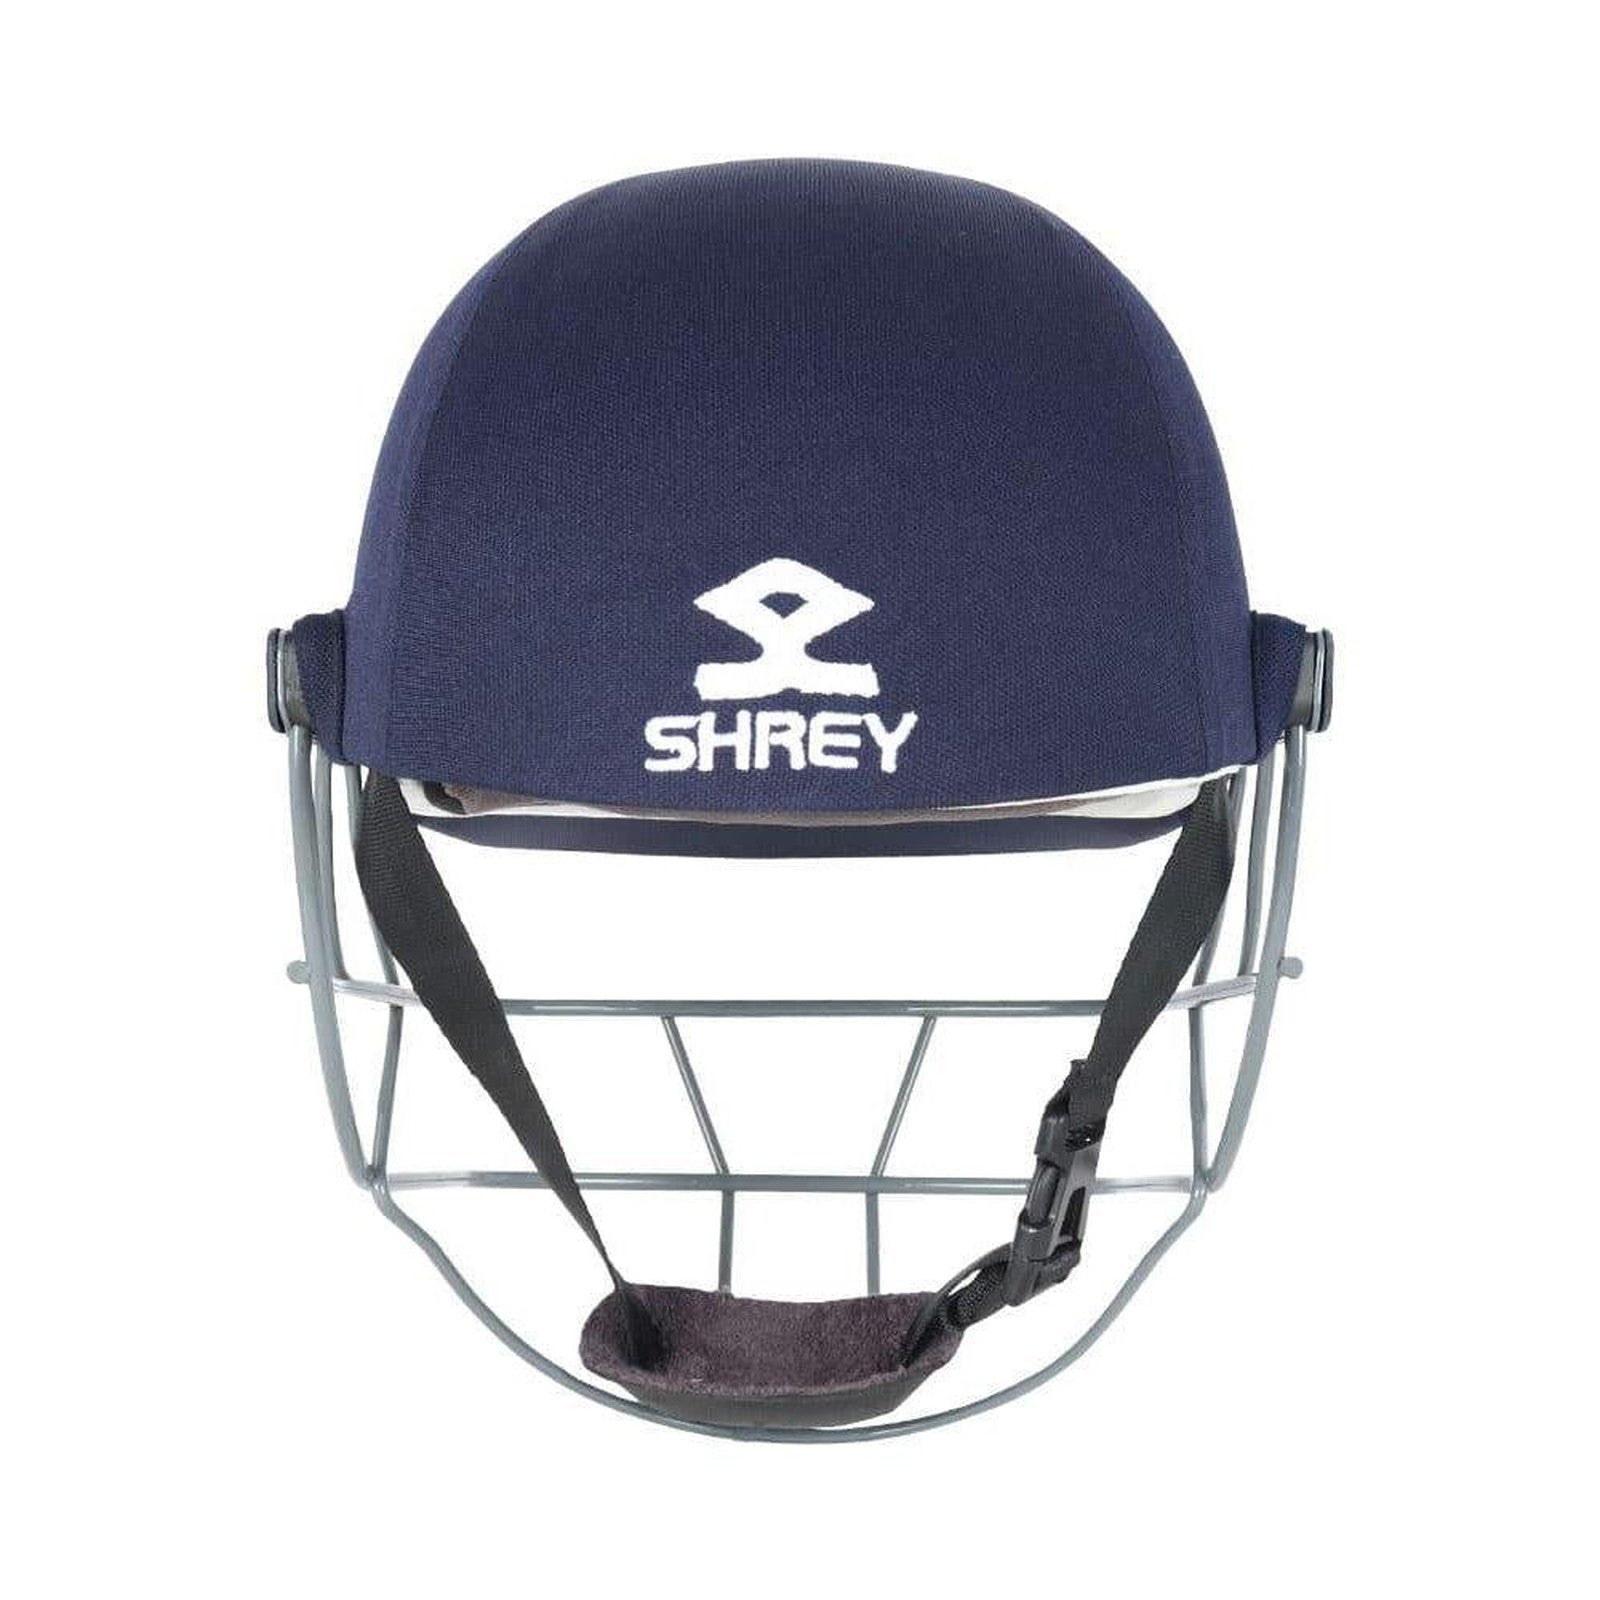 Shrey Performance 2.0 Cricket Helmet With Mild Steel - Navy Senior